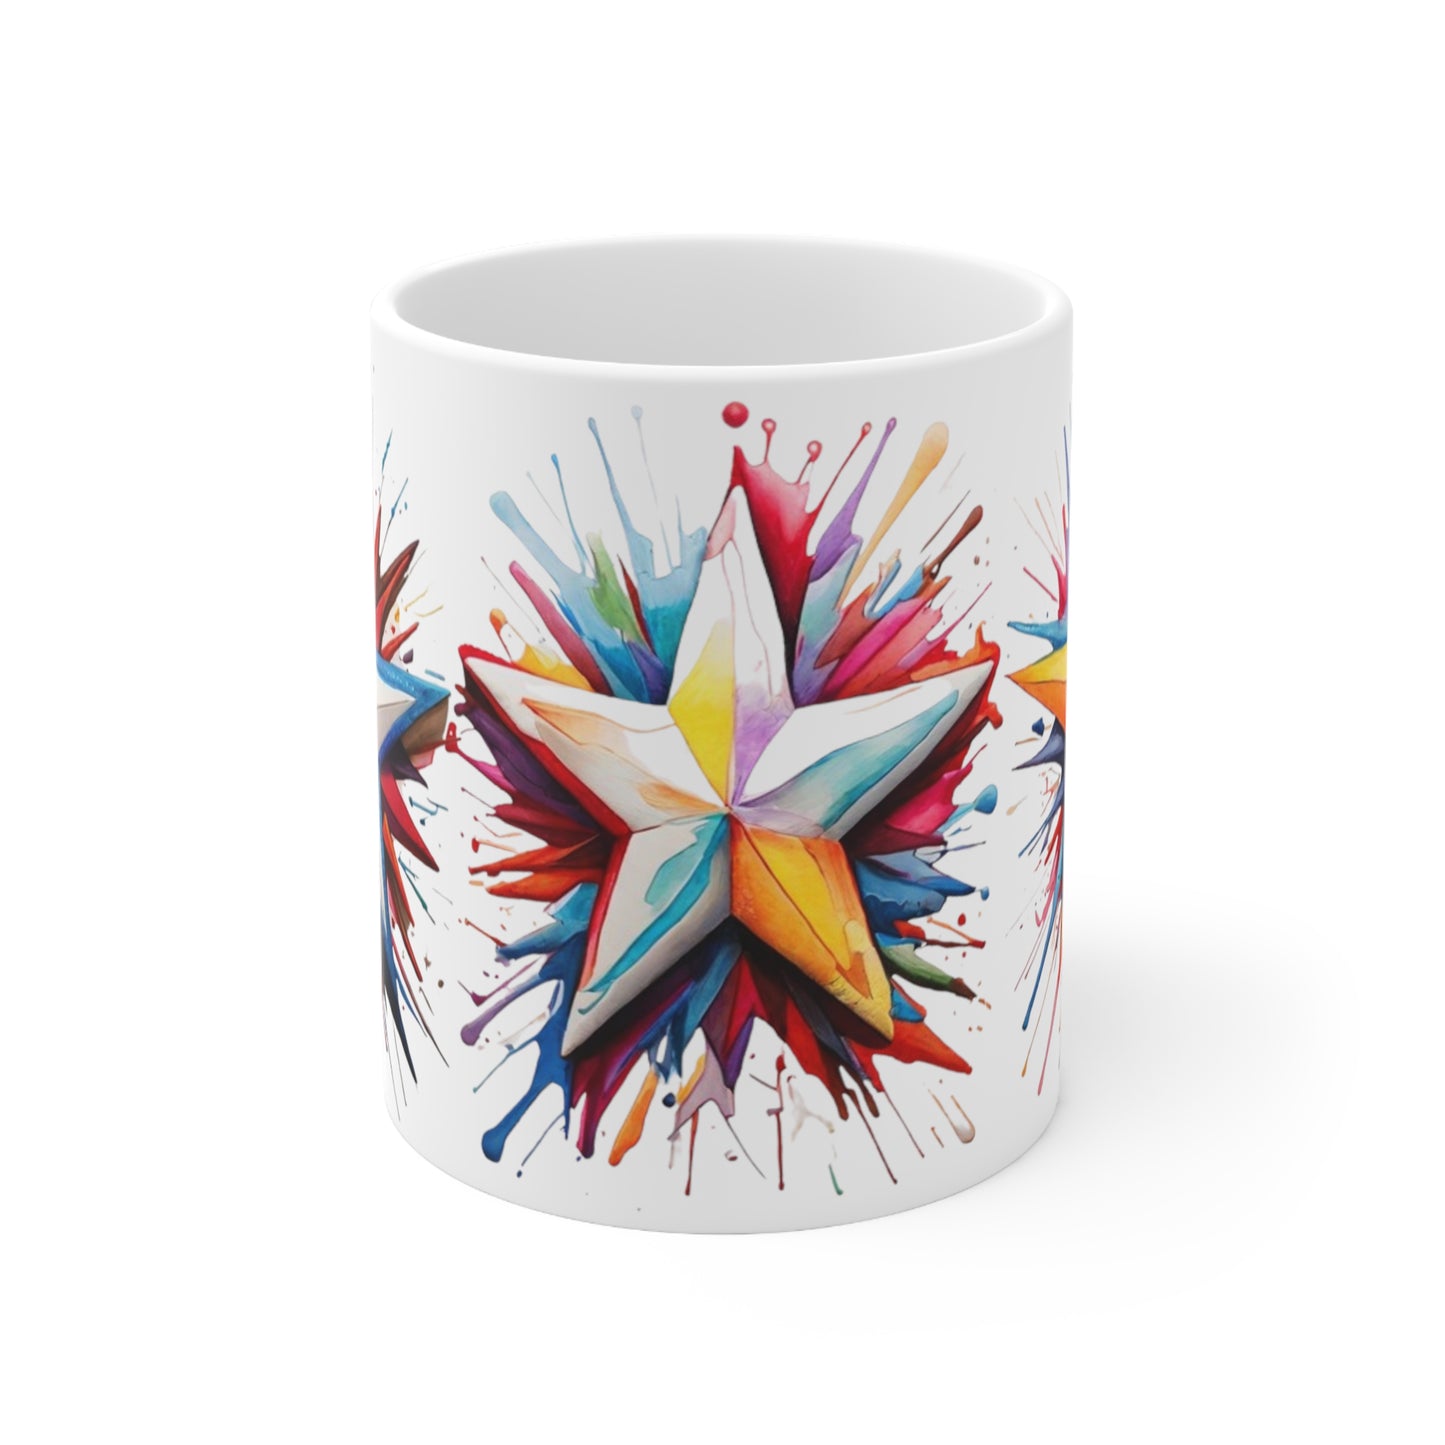 Colourful Stars Art Mug - Ceramic Coffee Mug 11oz